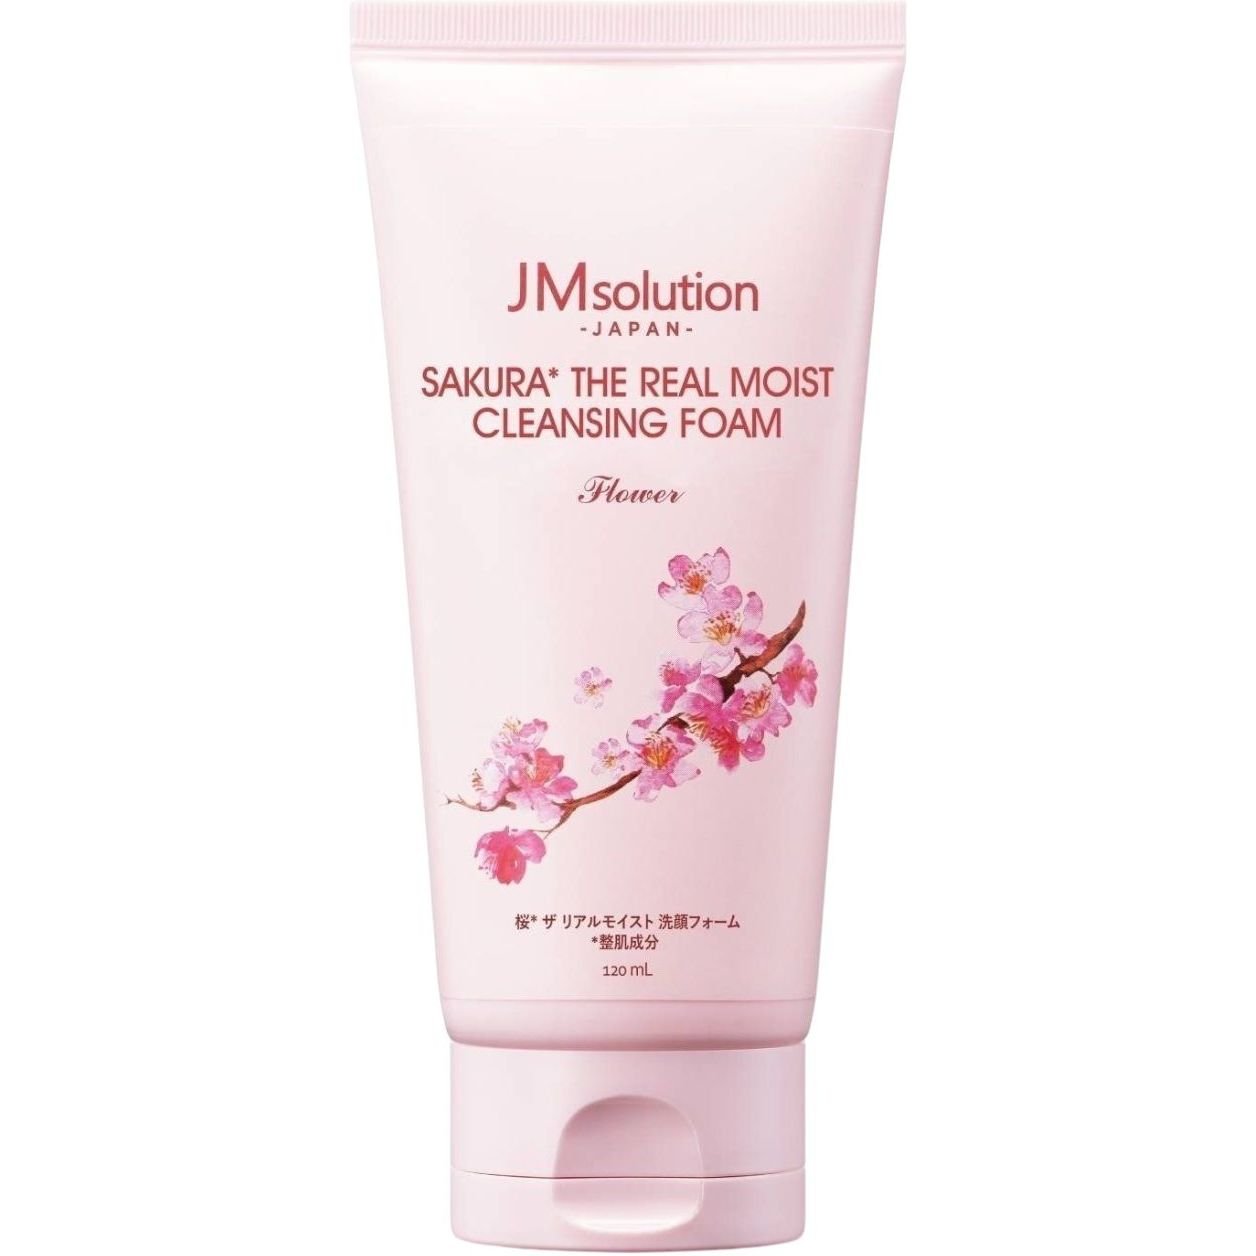 Очищающая пена JMsolution Sakura The Real Moist Cleansing Foam, 120 мл - фото 1